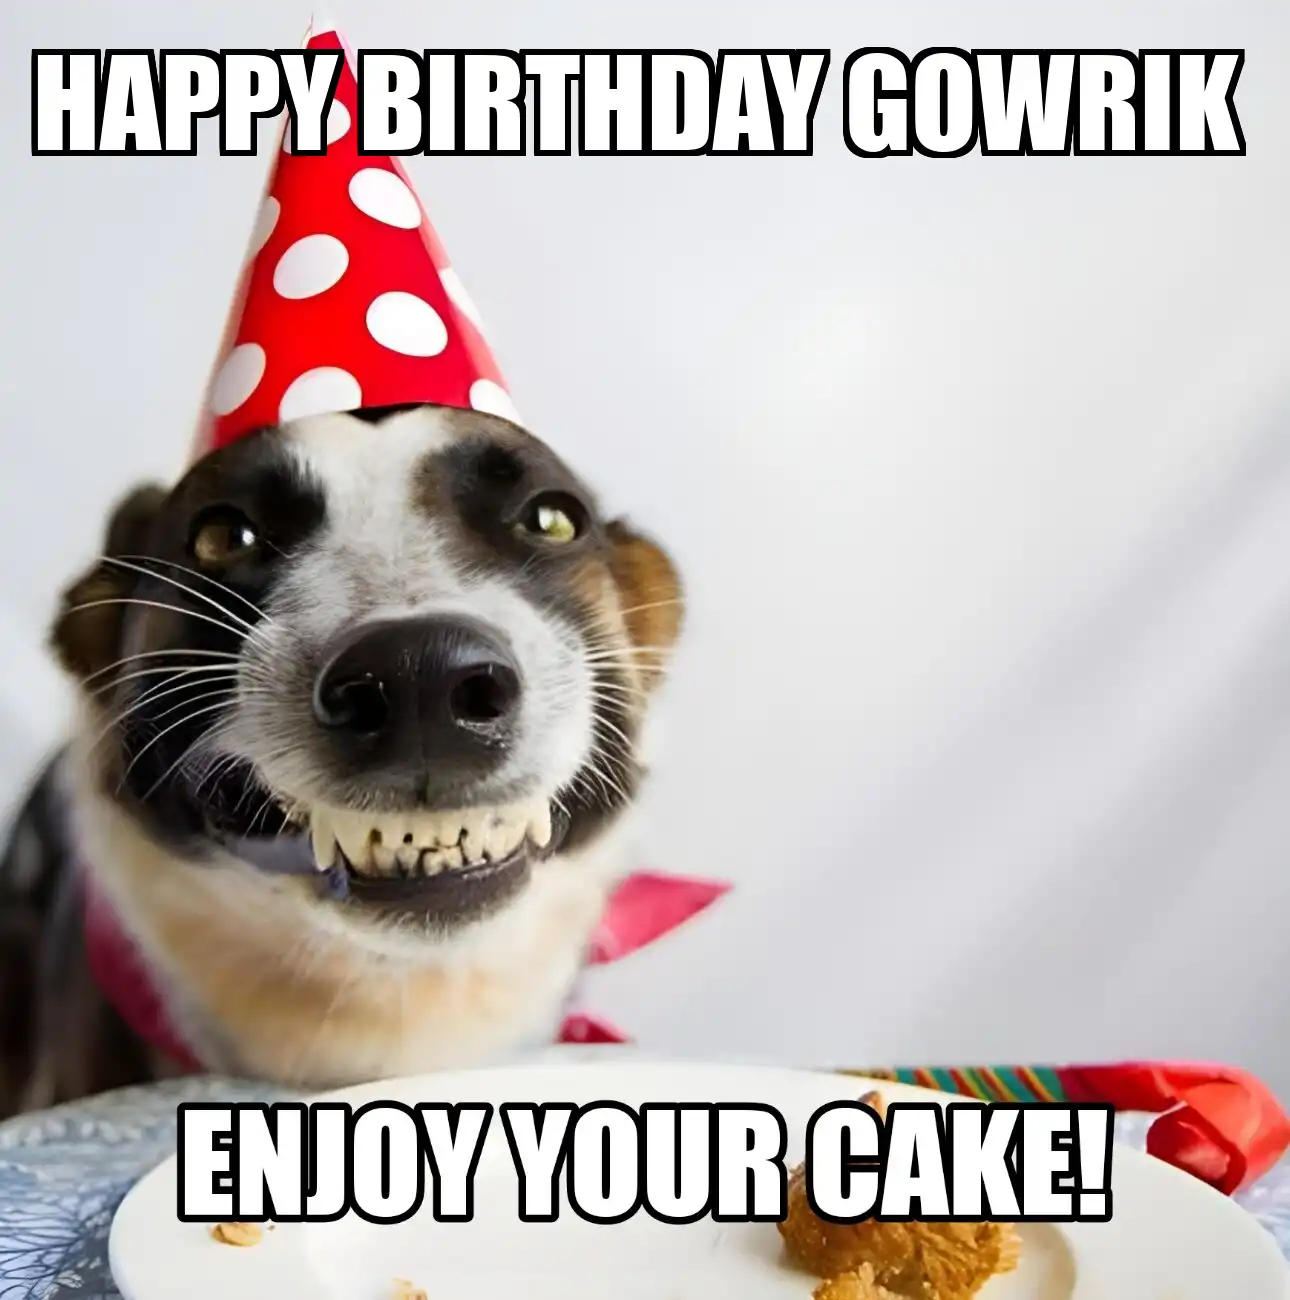 Happy Birthday Gowrik Enjoy Your Cake Dog Meme